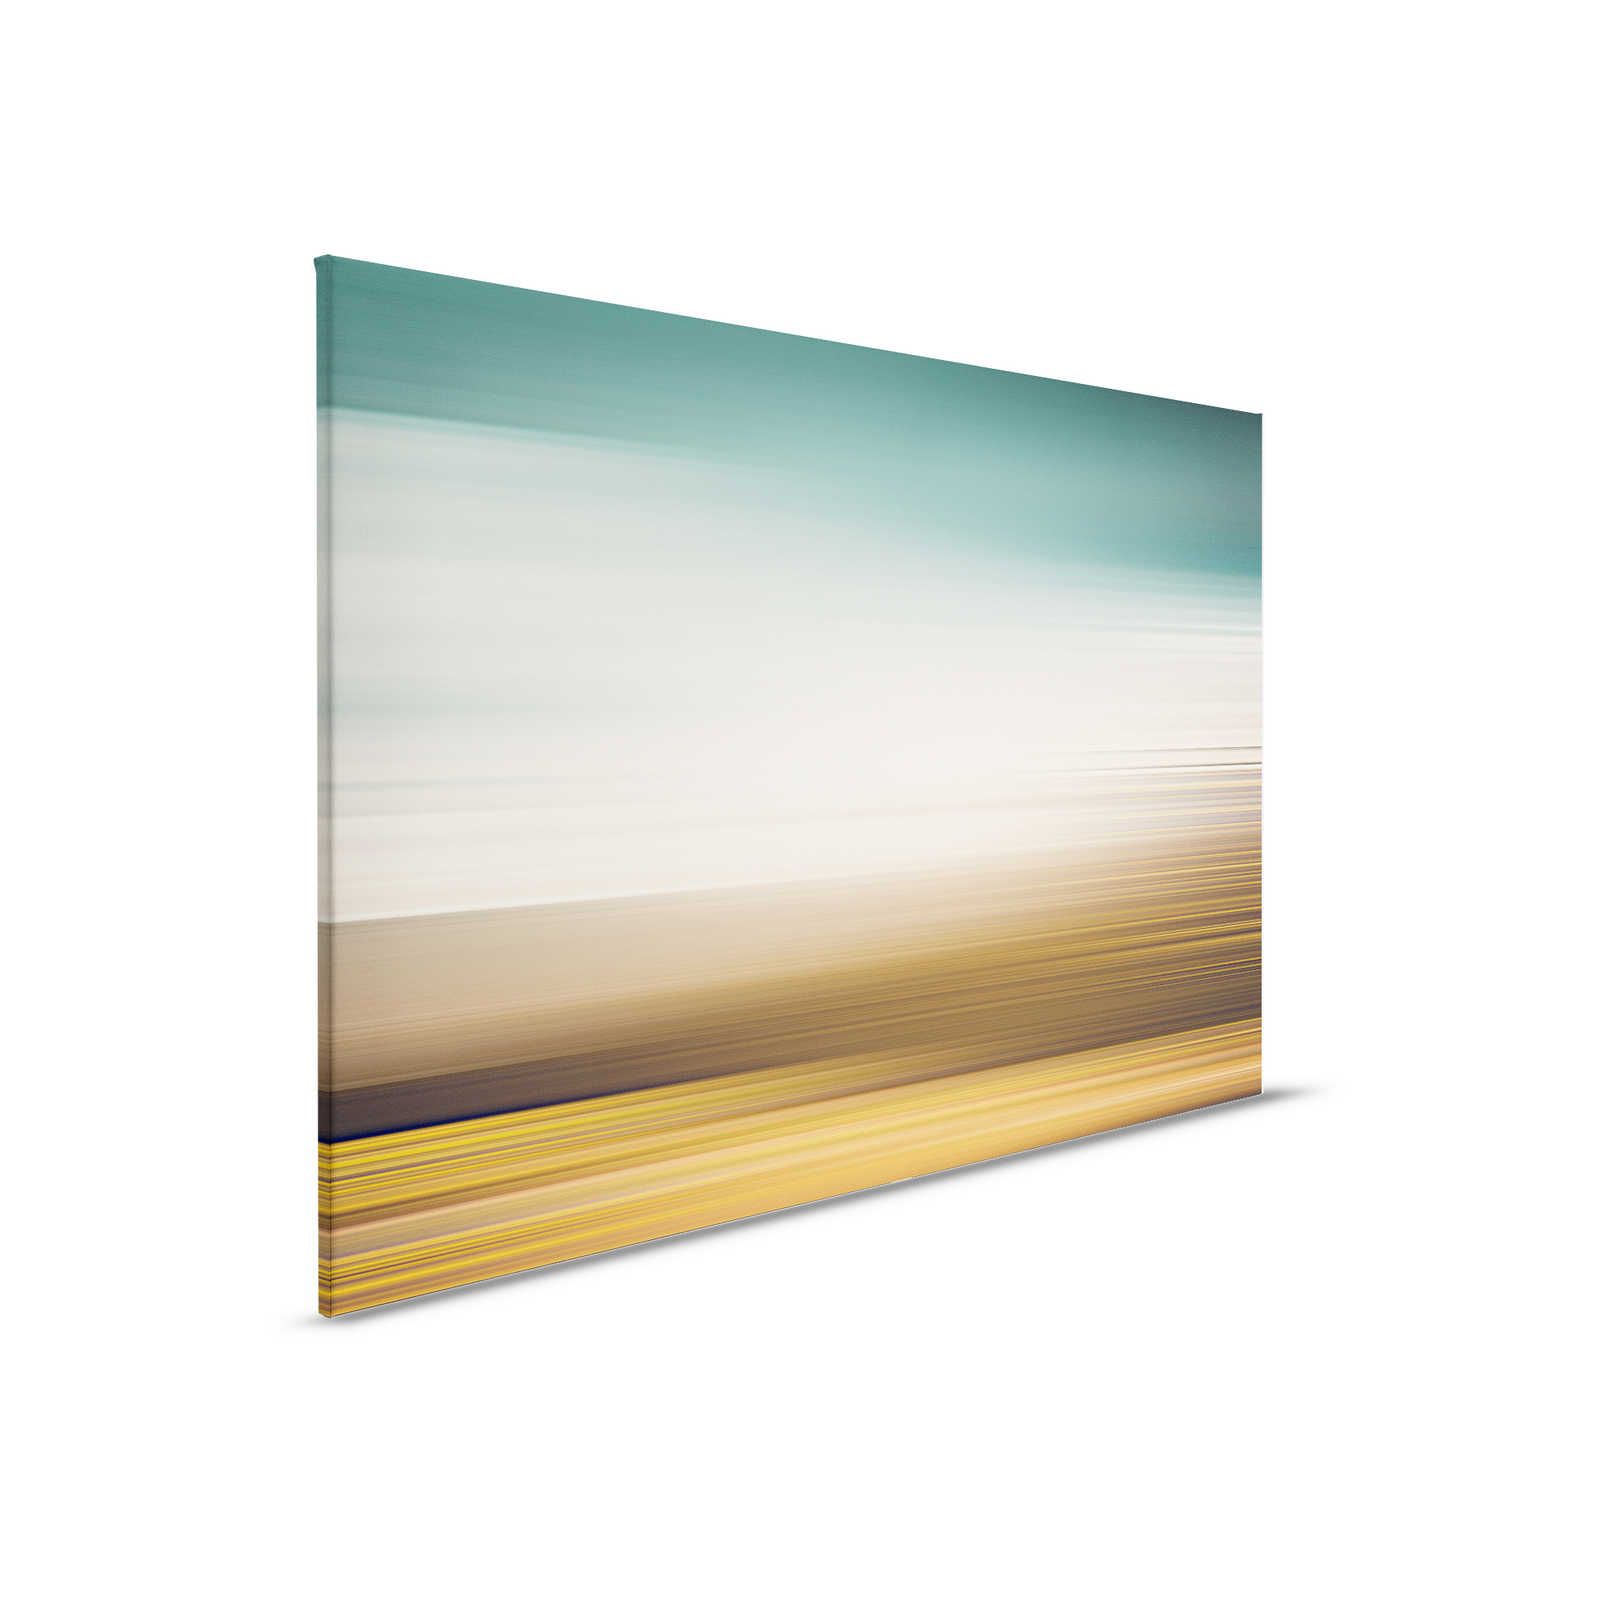         Horizon 3 - Canvas painting Landscape abstract with colour design - 0,90 m x 0,60 m
    